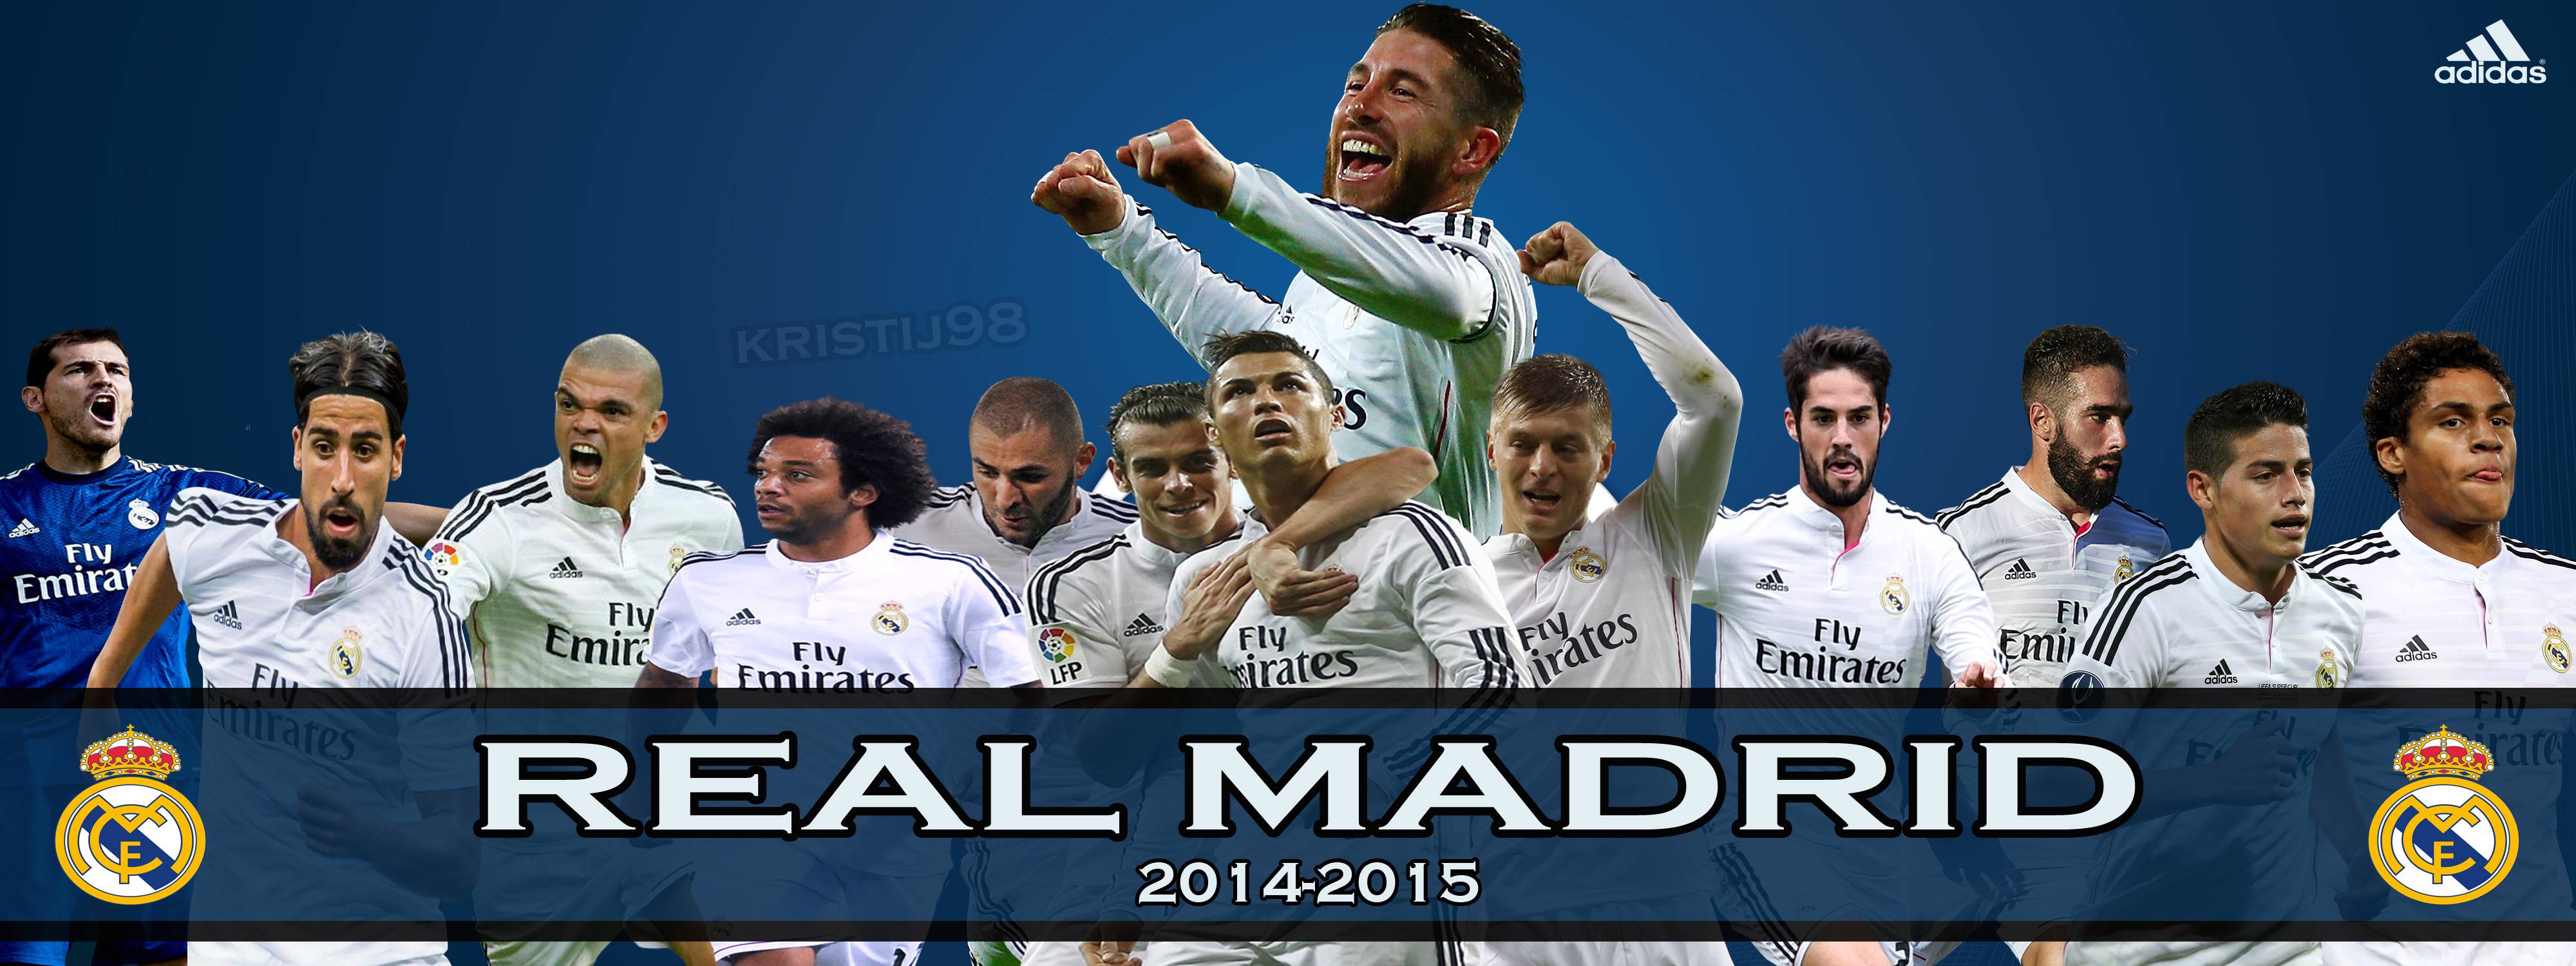 Real Madrid Wallpaper 2015